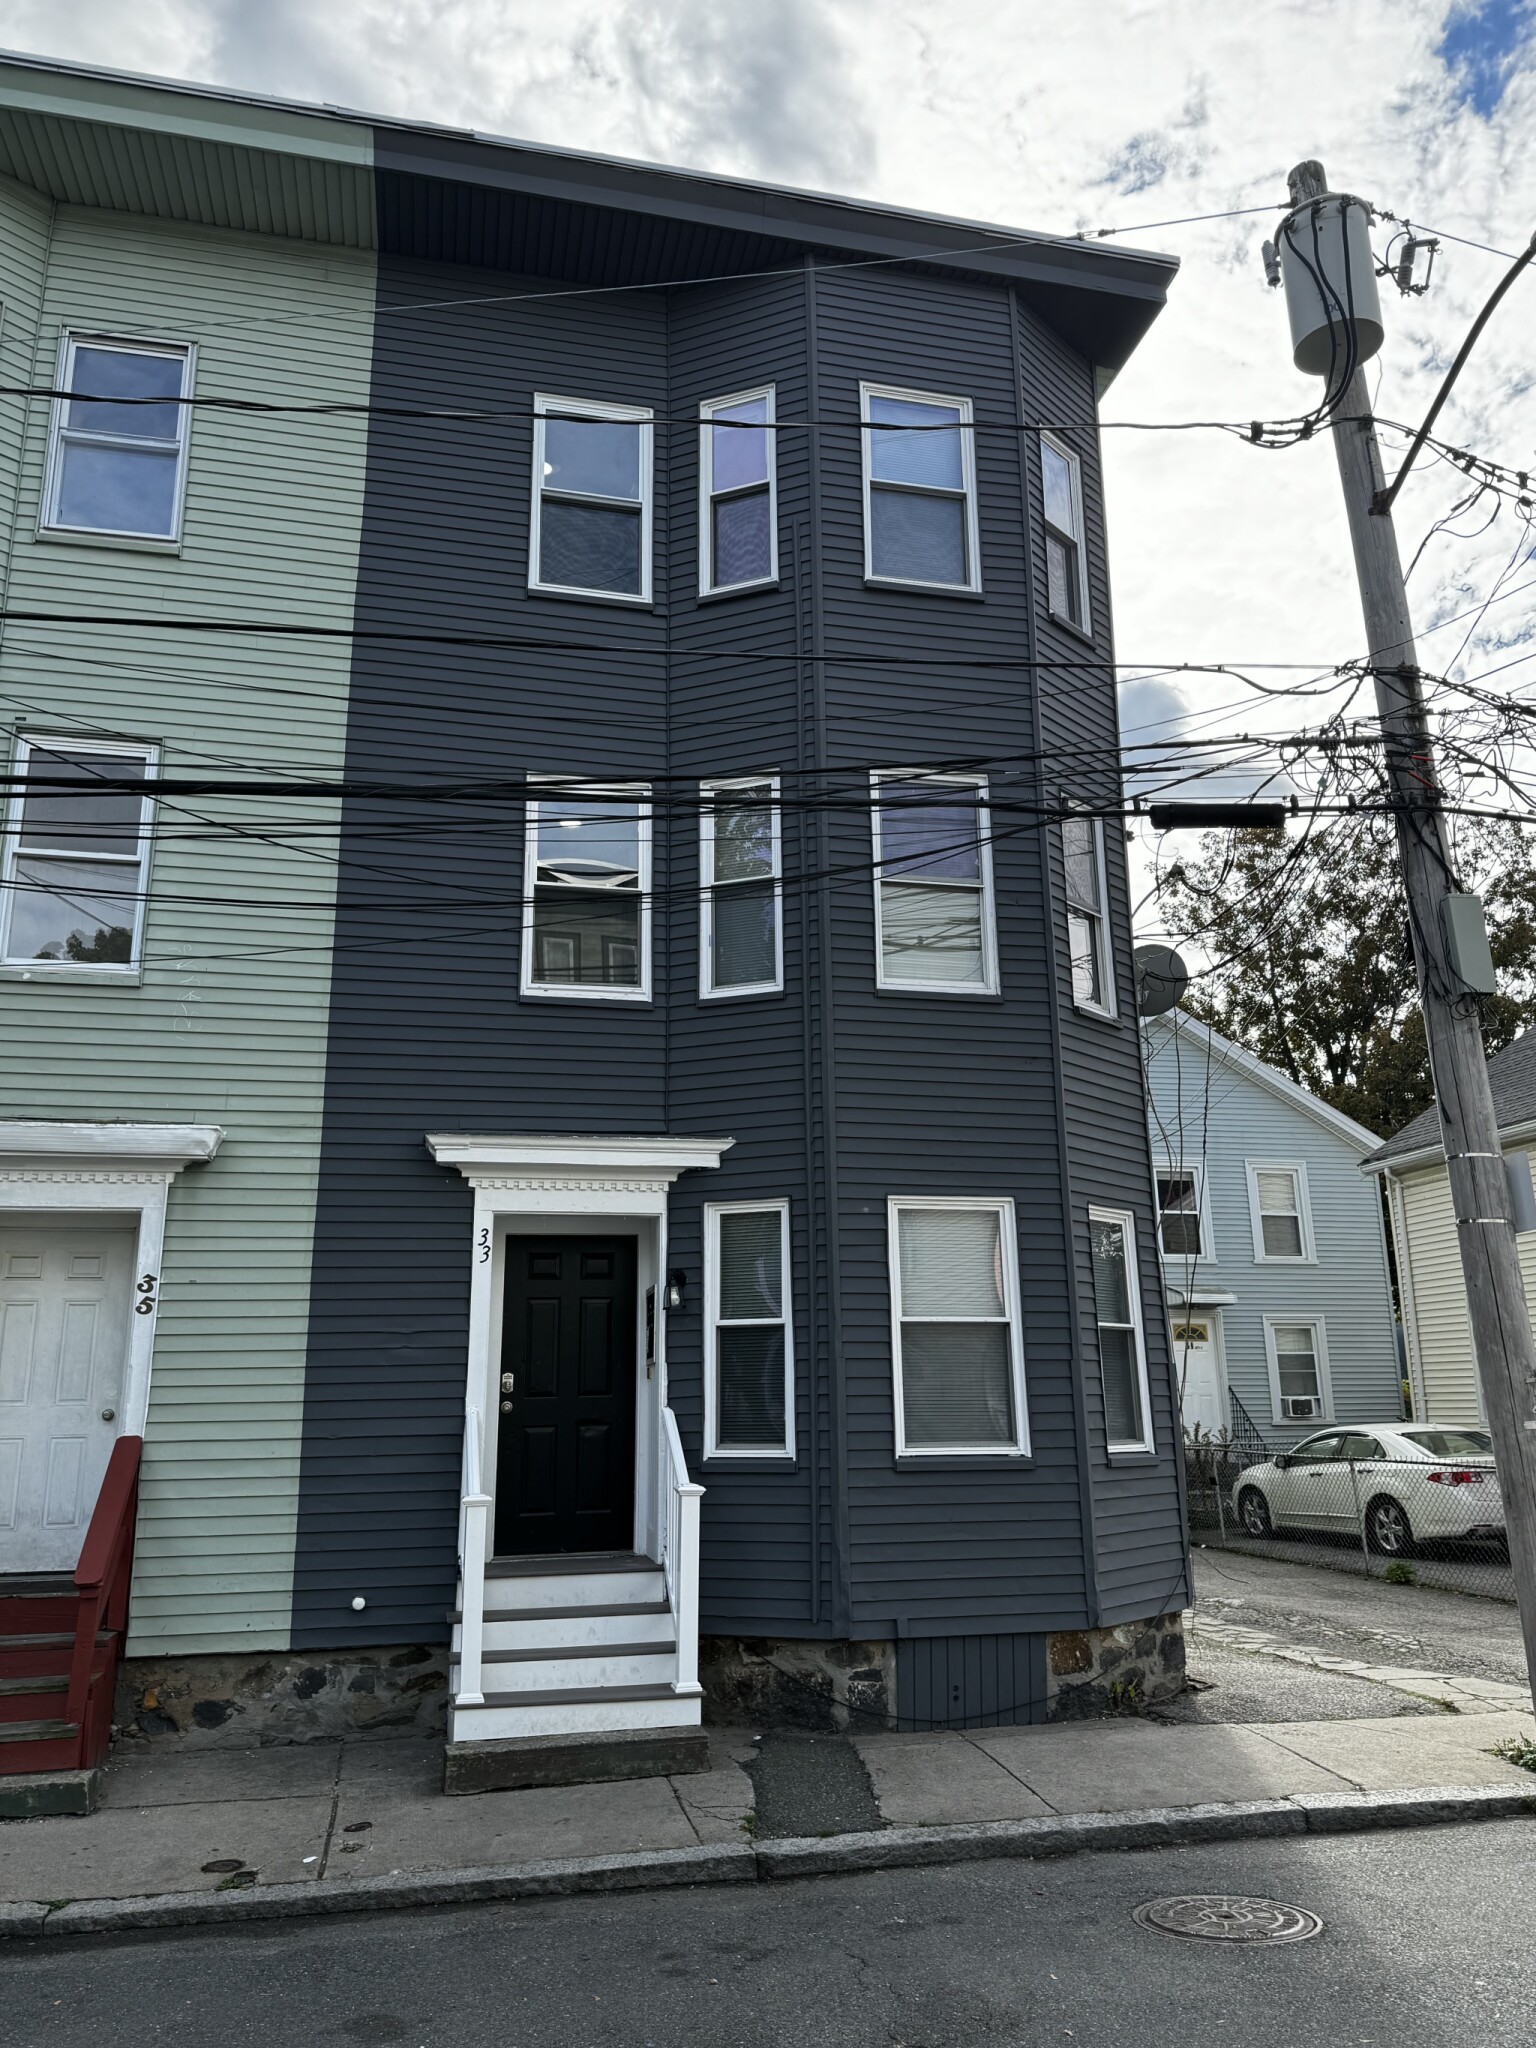 Photos of apartment on Bayard St.,Boston MA 02134